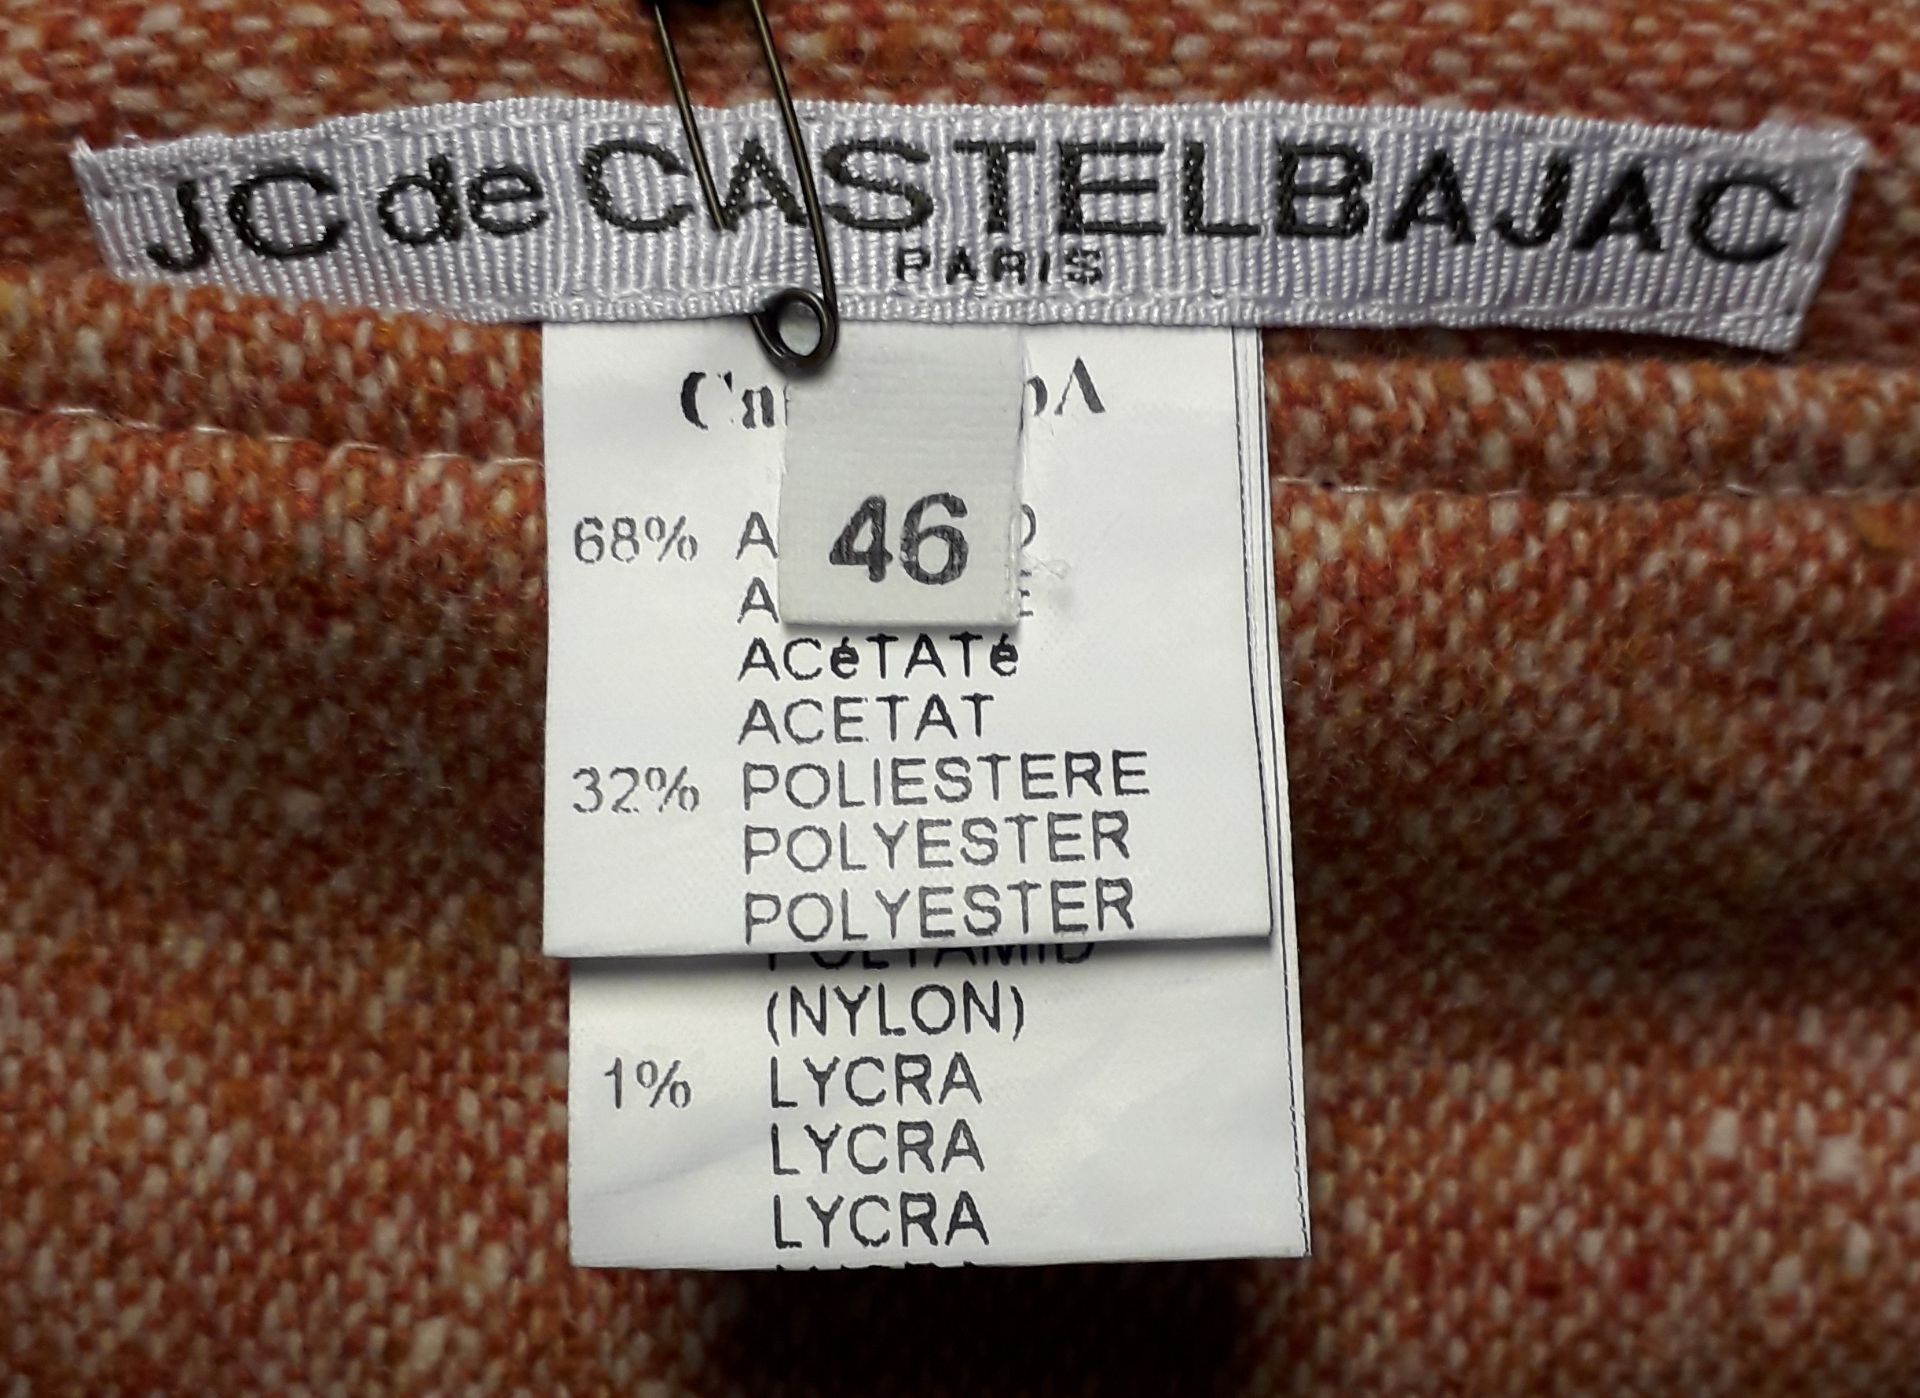 1 x Jc De Castlebajac Paris Tangerine Pencil Skirt - Size: 46 - Material: Lining 68% Acetate, 32% - Image 3 of 3